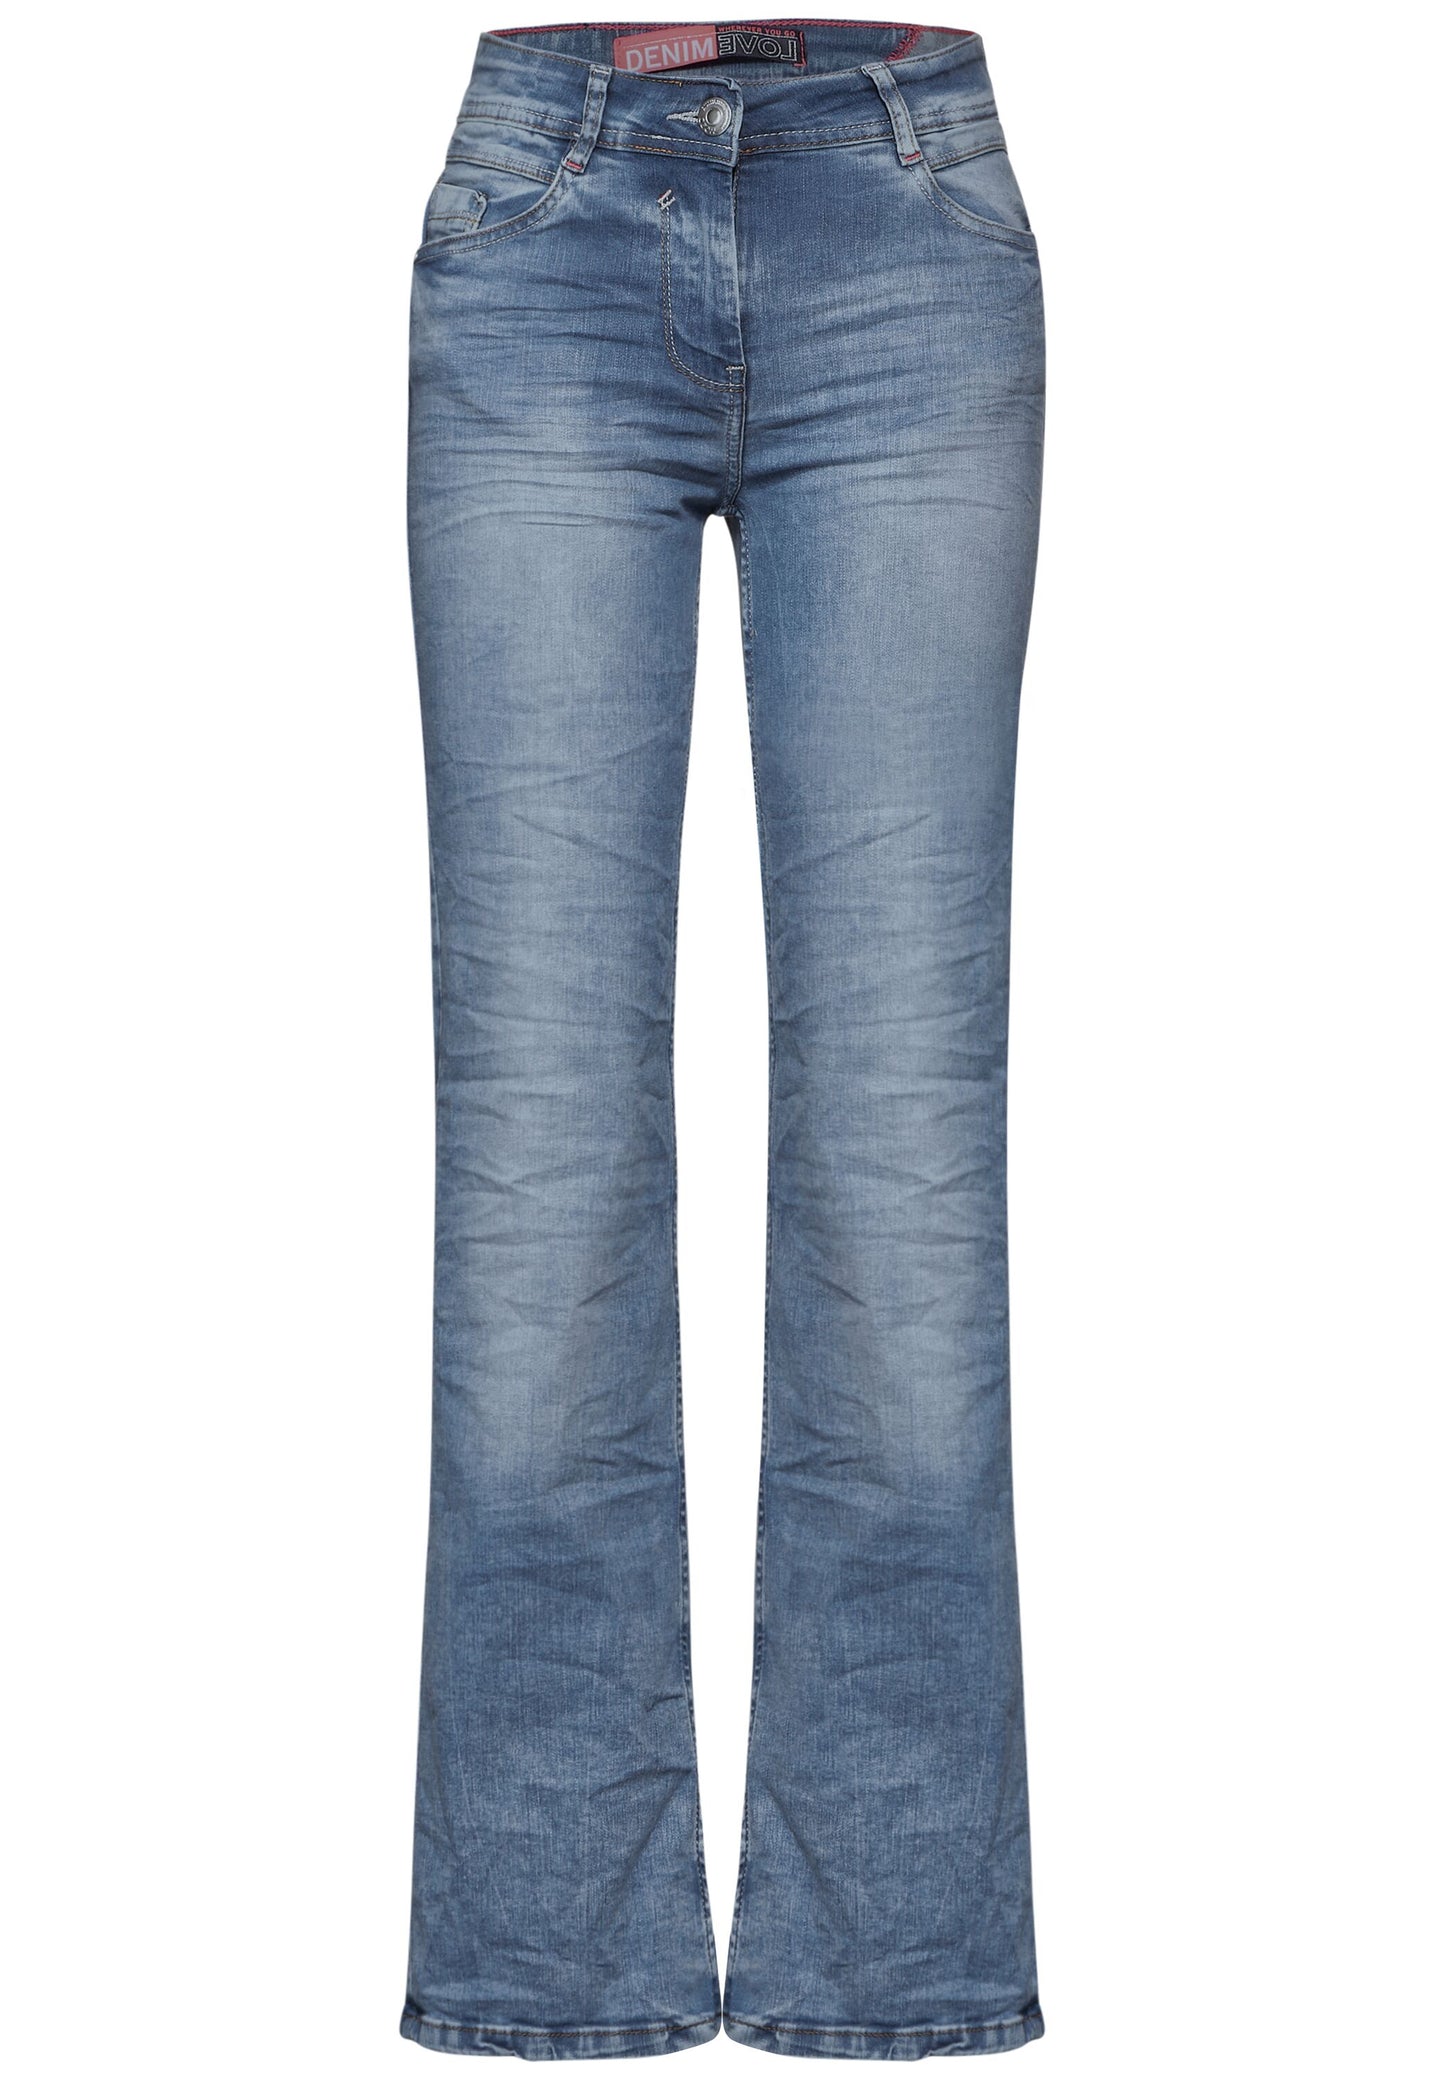 CECIL - Slim Fit Jeans im Style Toronto